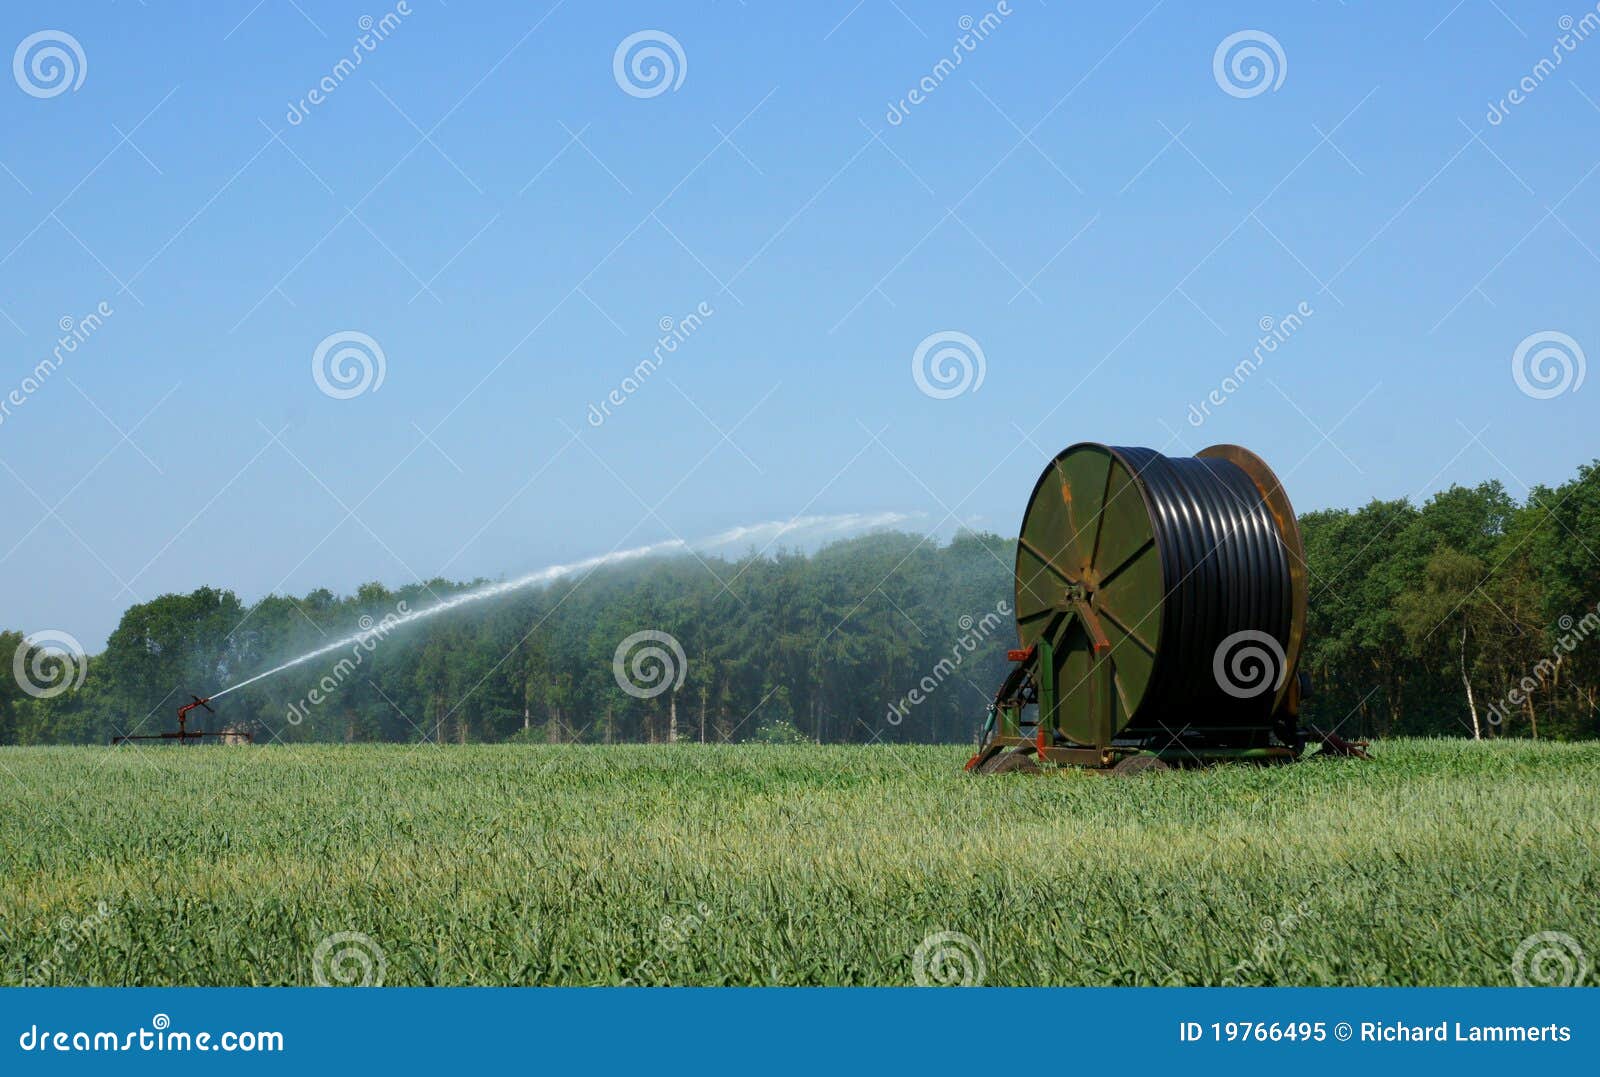 Spraying Grain Stock Image Image Of Irrigate Plant 19766495 